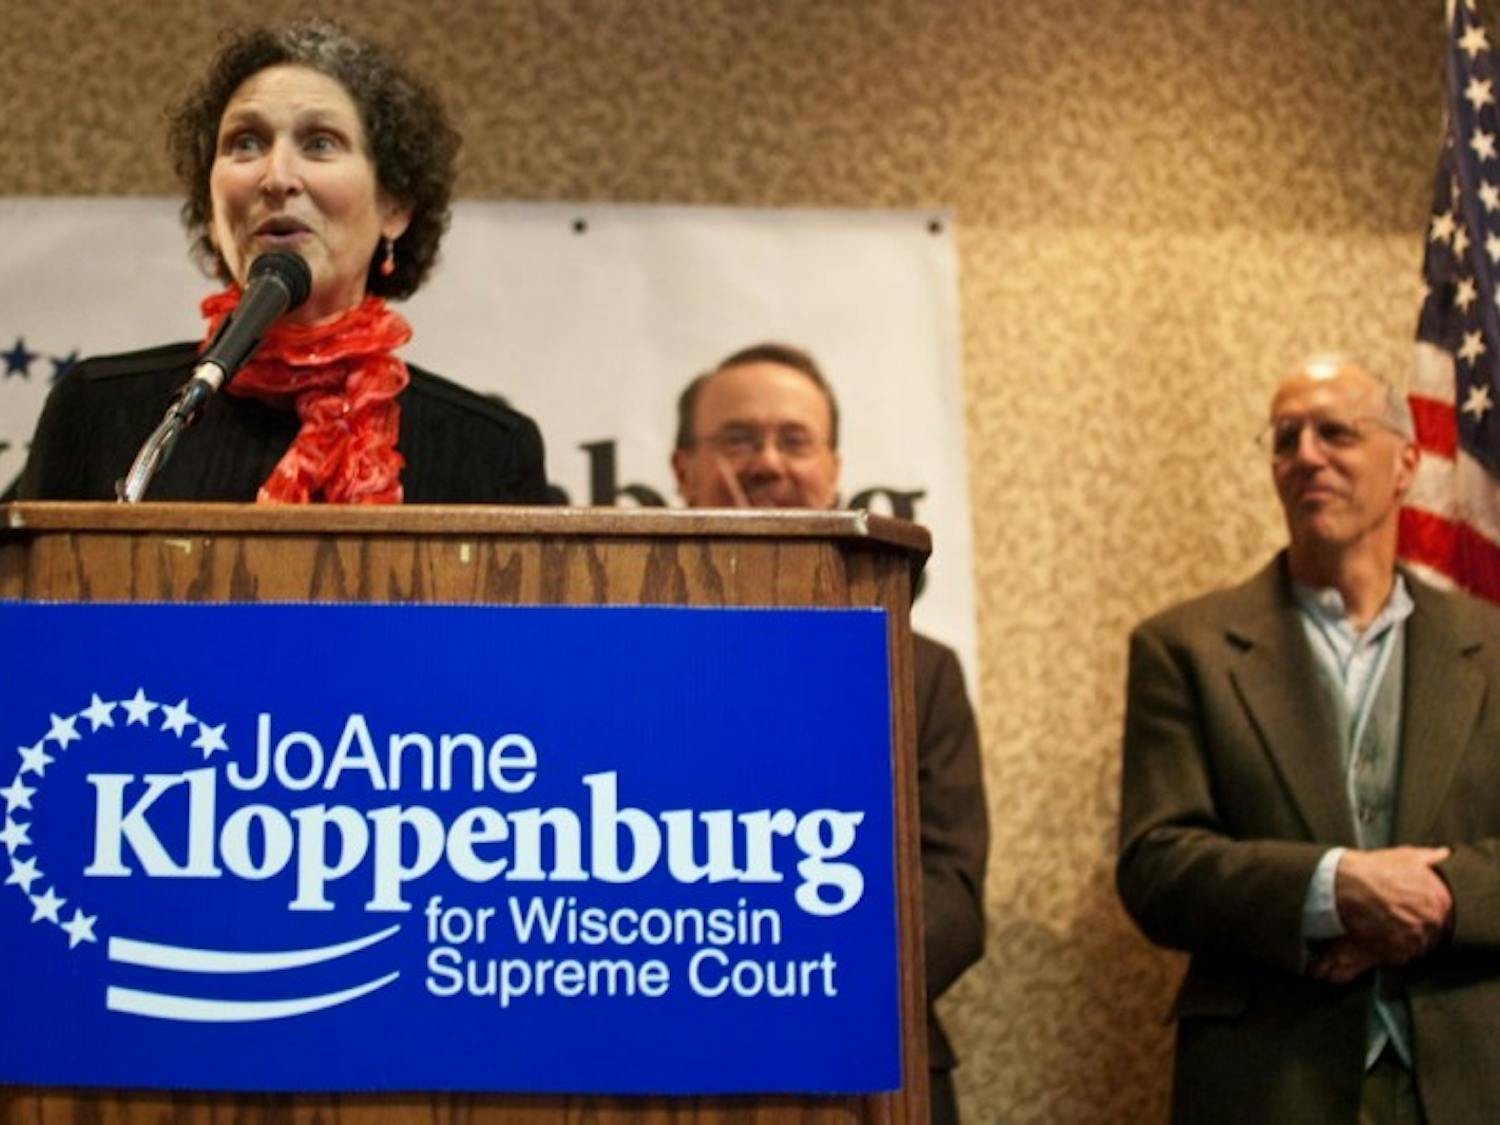 Kloppenburg requests recount in court race